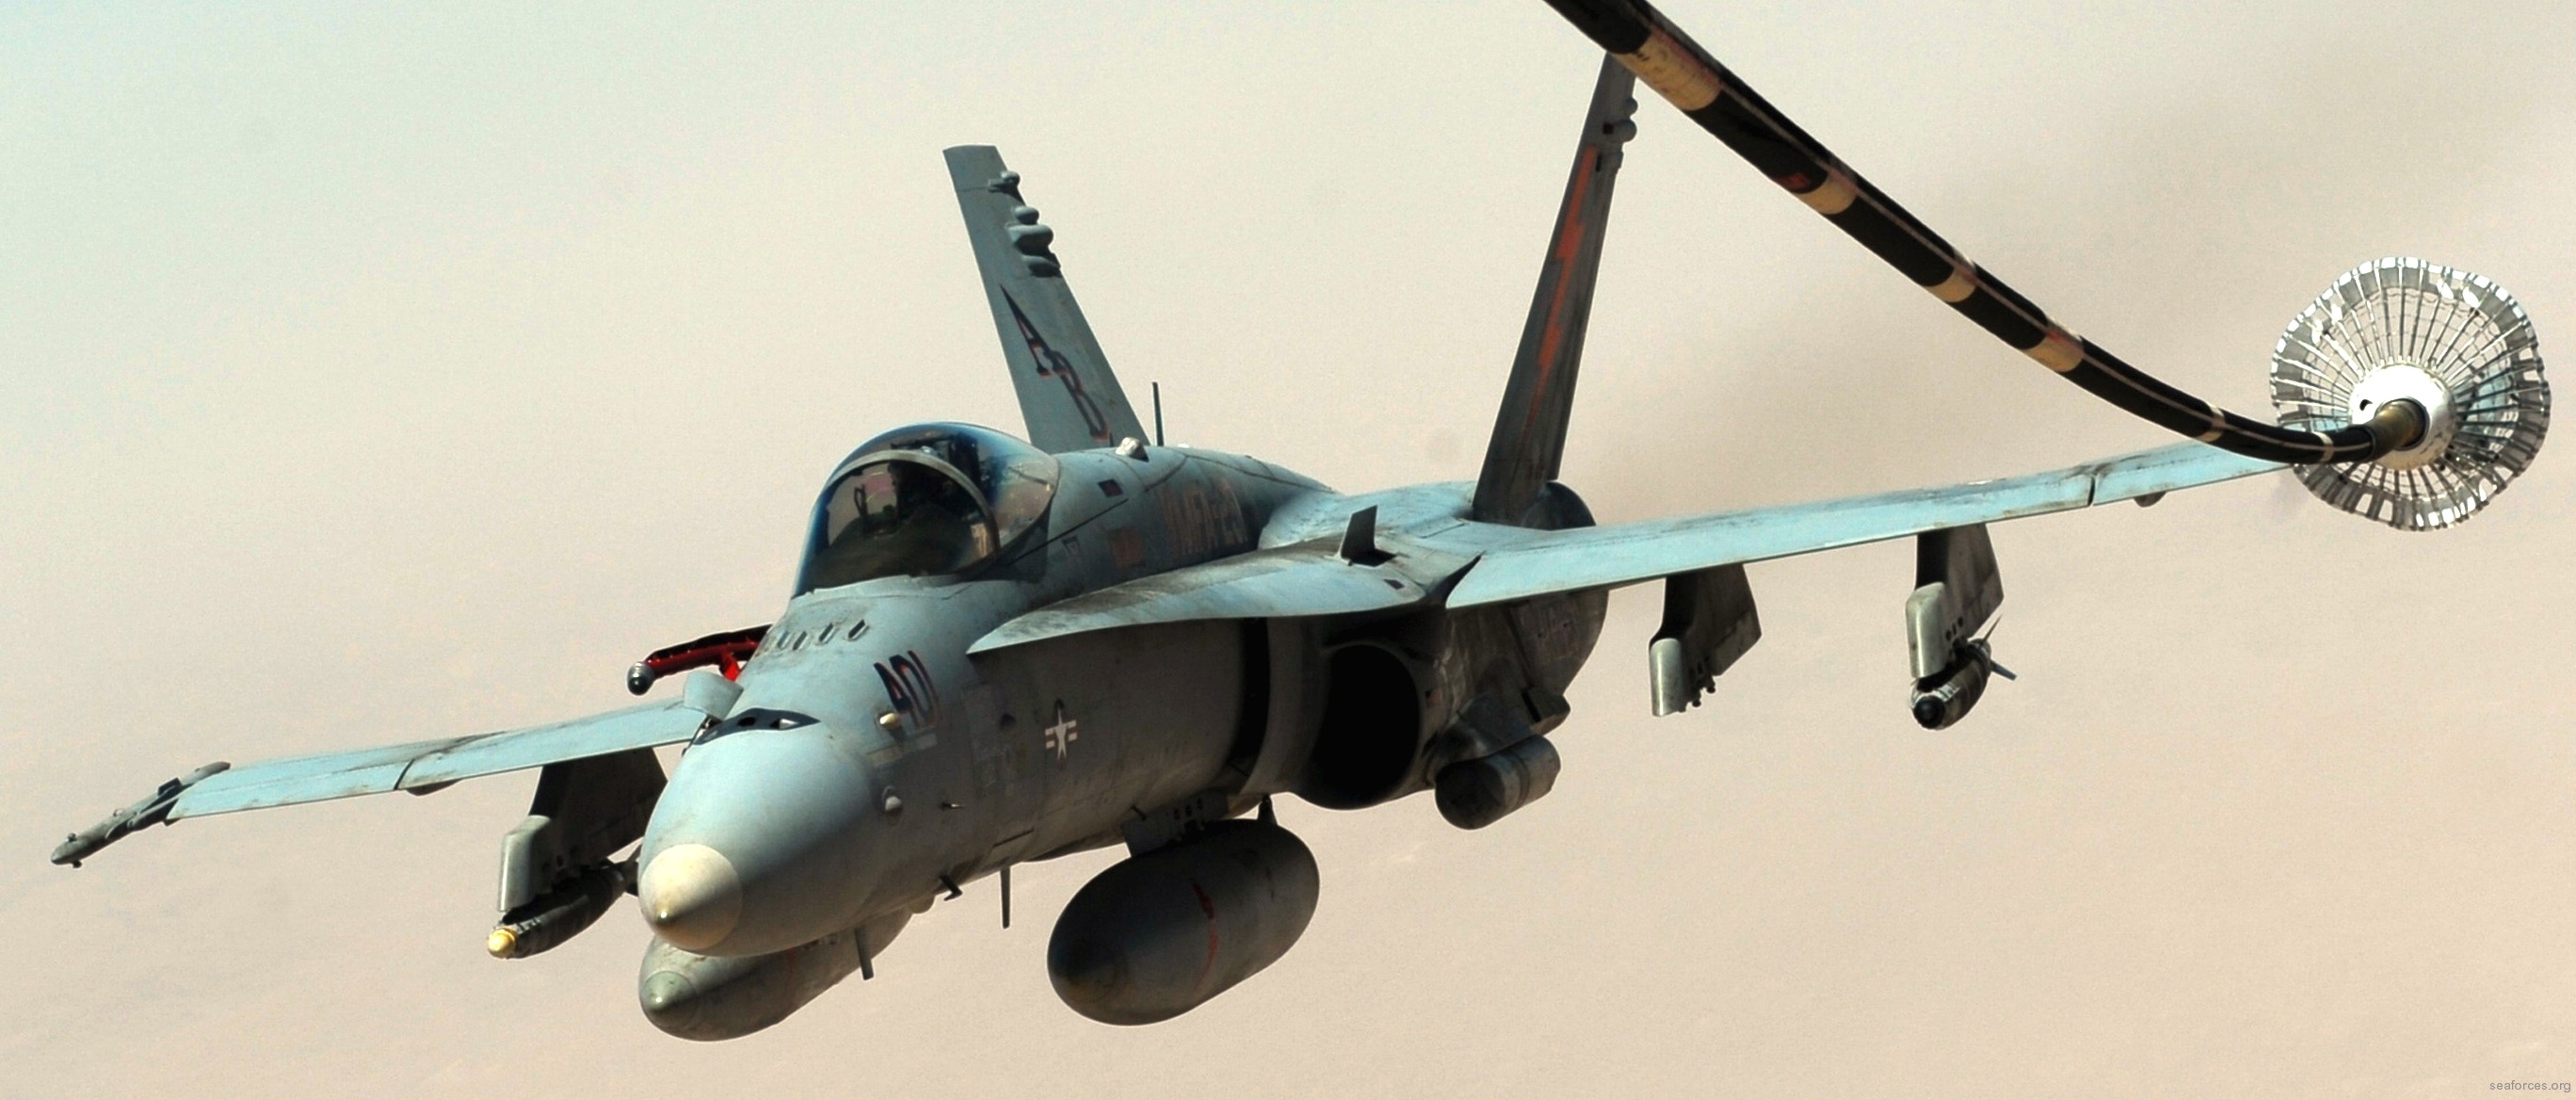 vmfa-251 thunderbolts marine fighter attack squadron f/a-18c hornet cvw-1 uss enterprise cvn-65 afghanistan 154